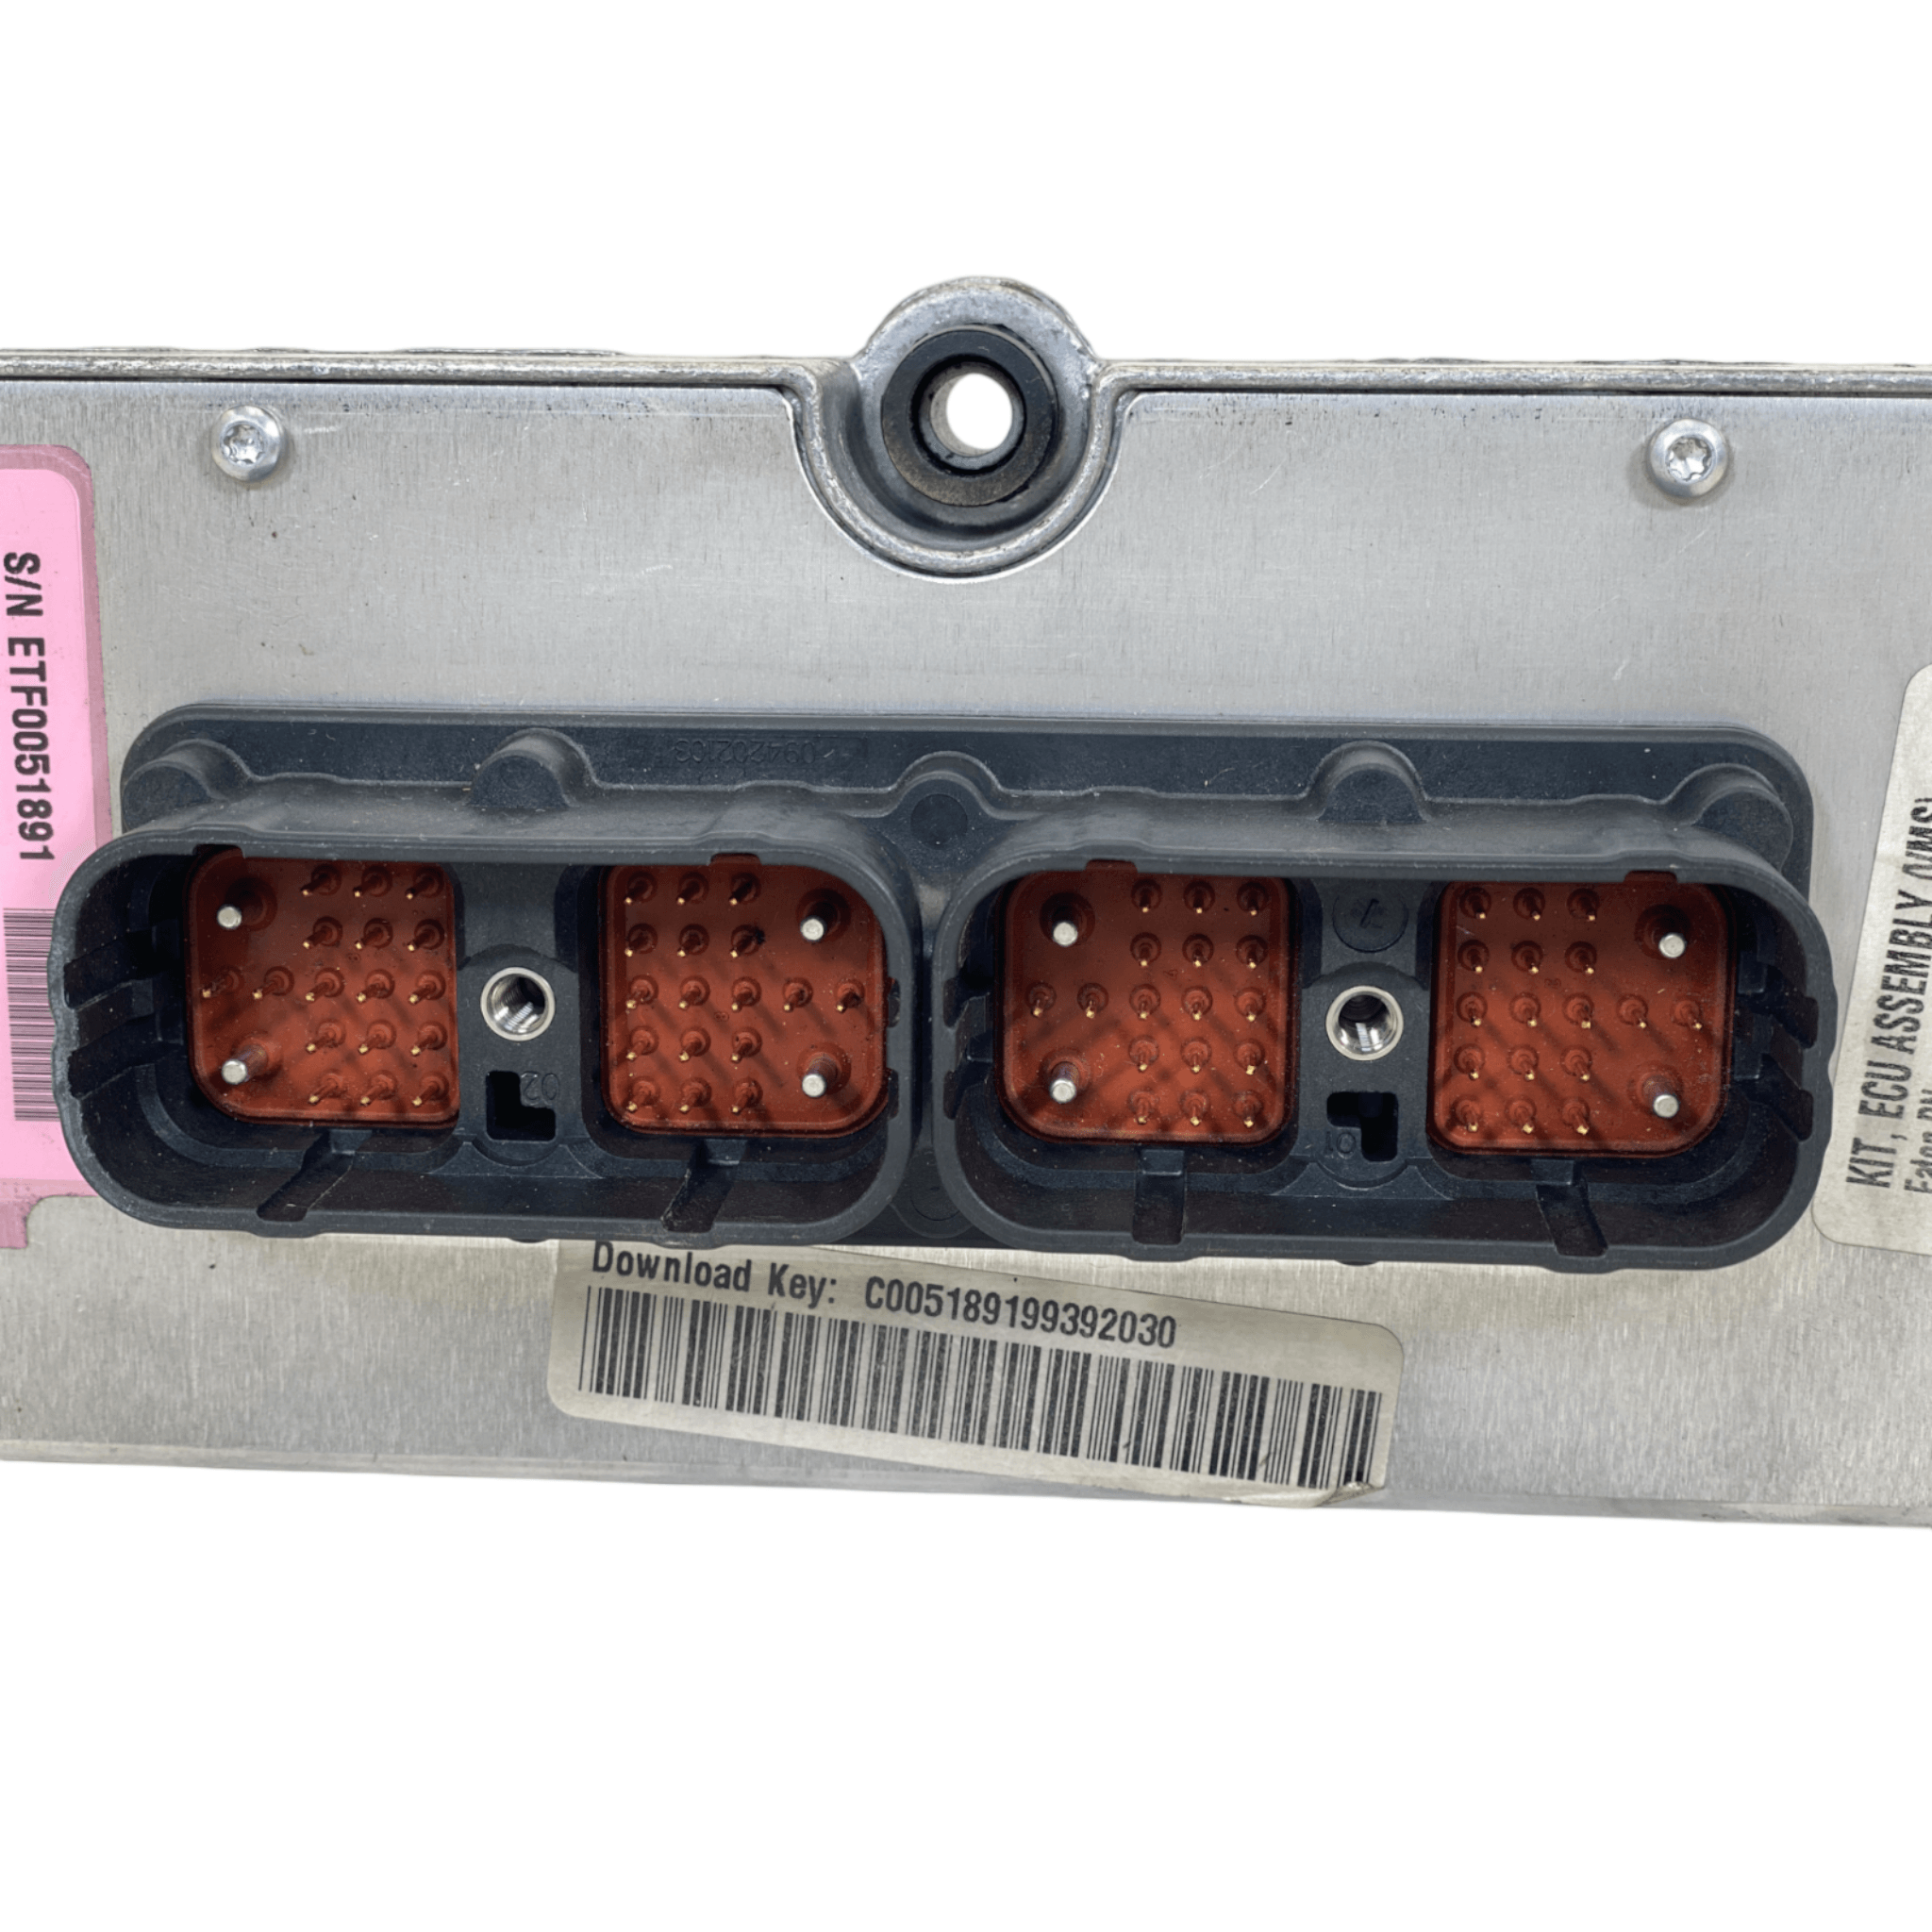 2C74850501 Genuine Eaton TCM Transmission Control Module - ADVANCED TRUCK PARTS